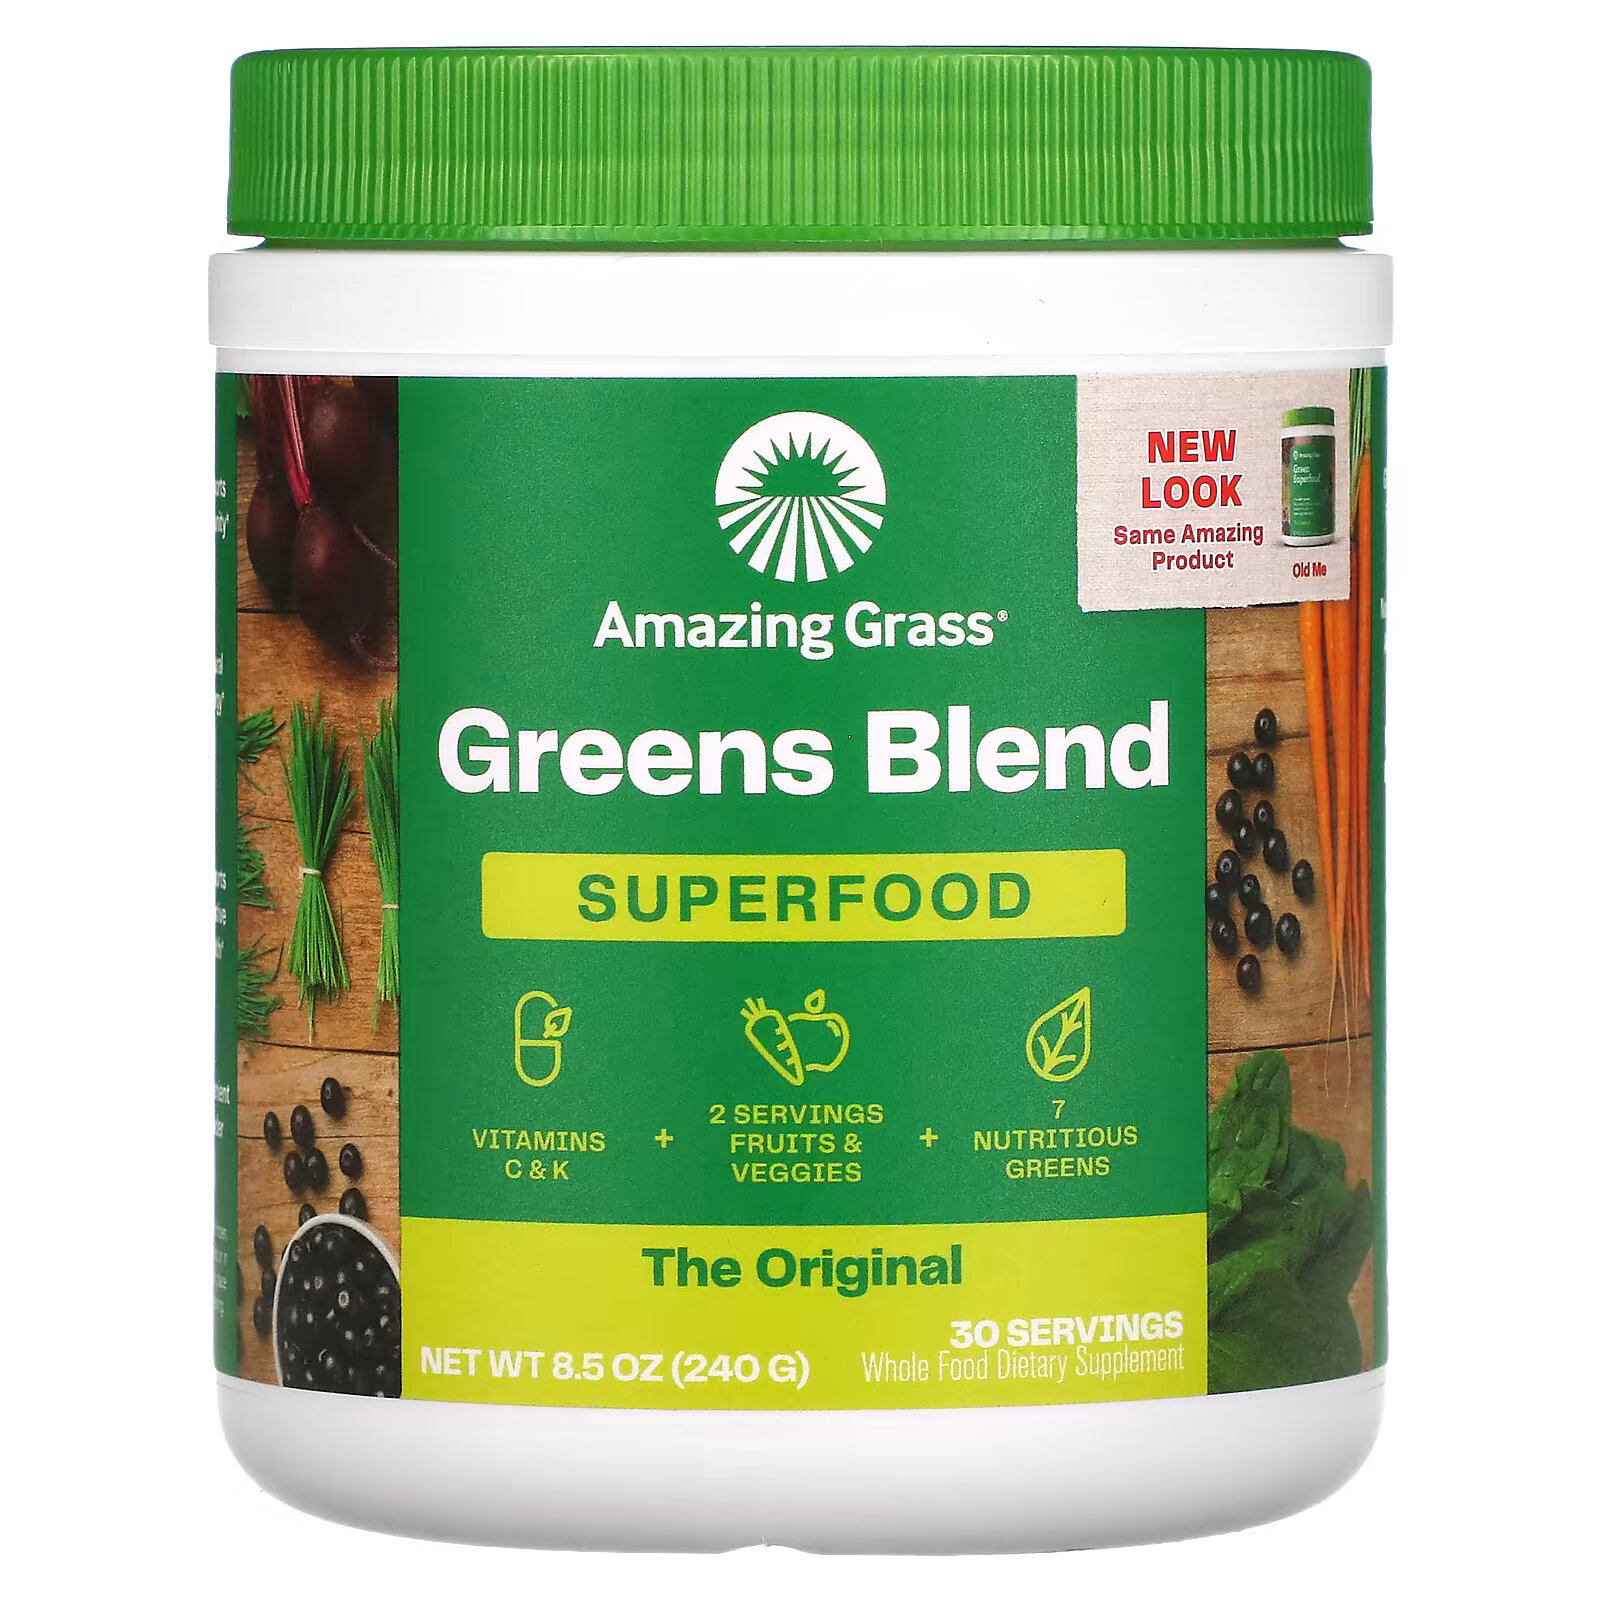 amazing grass антиоксидант green superfood сладкая ягода 210 г 7 4 унции Amazing Grass, Green Superfood, The Original, 240 г (8,5 унции)